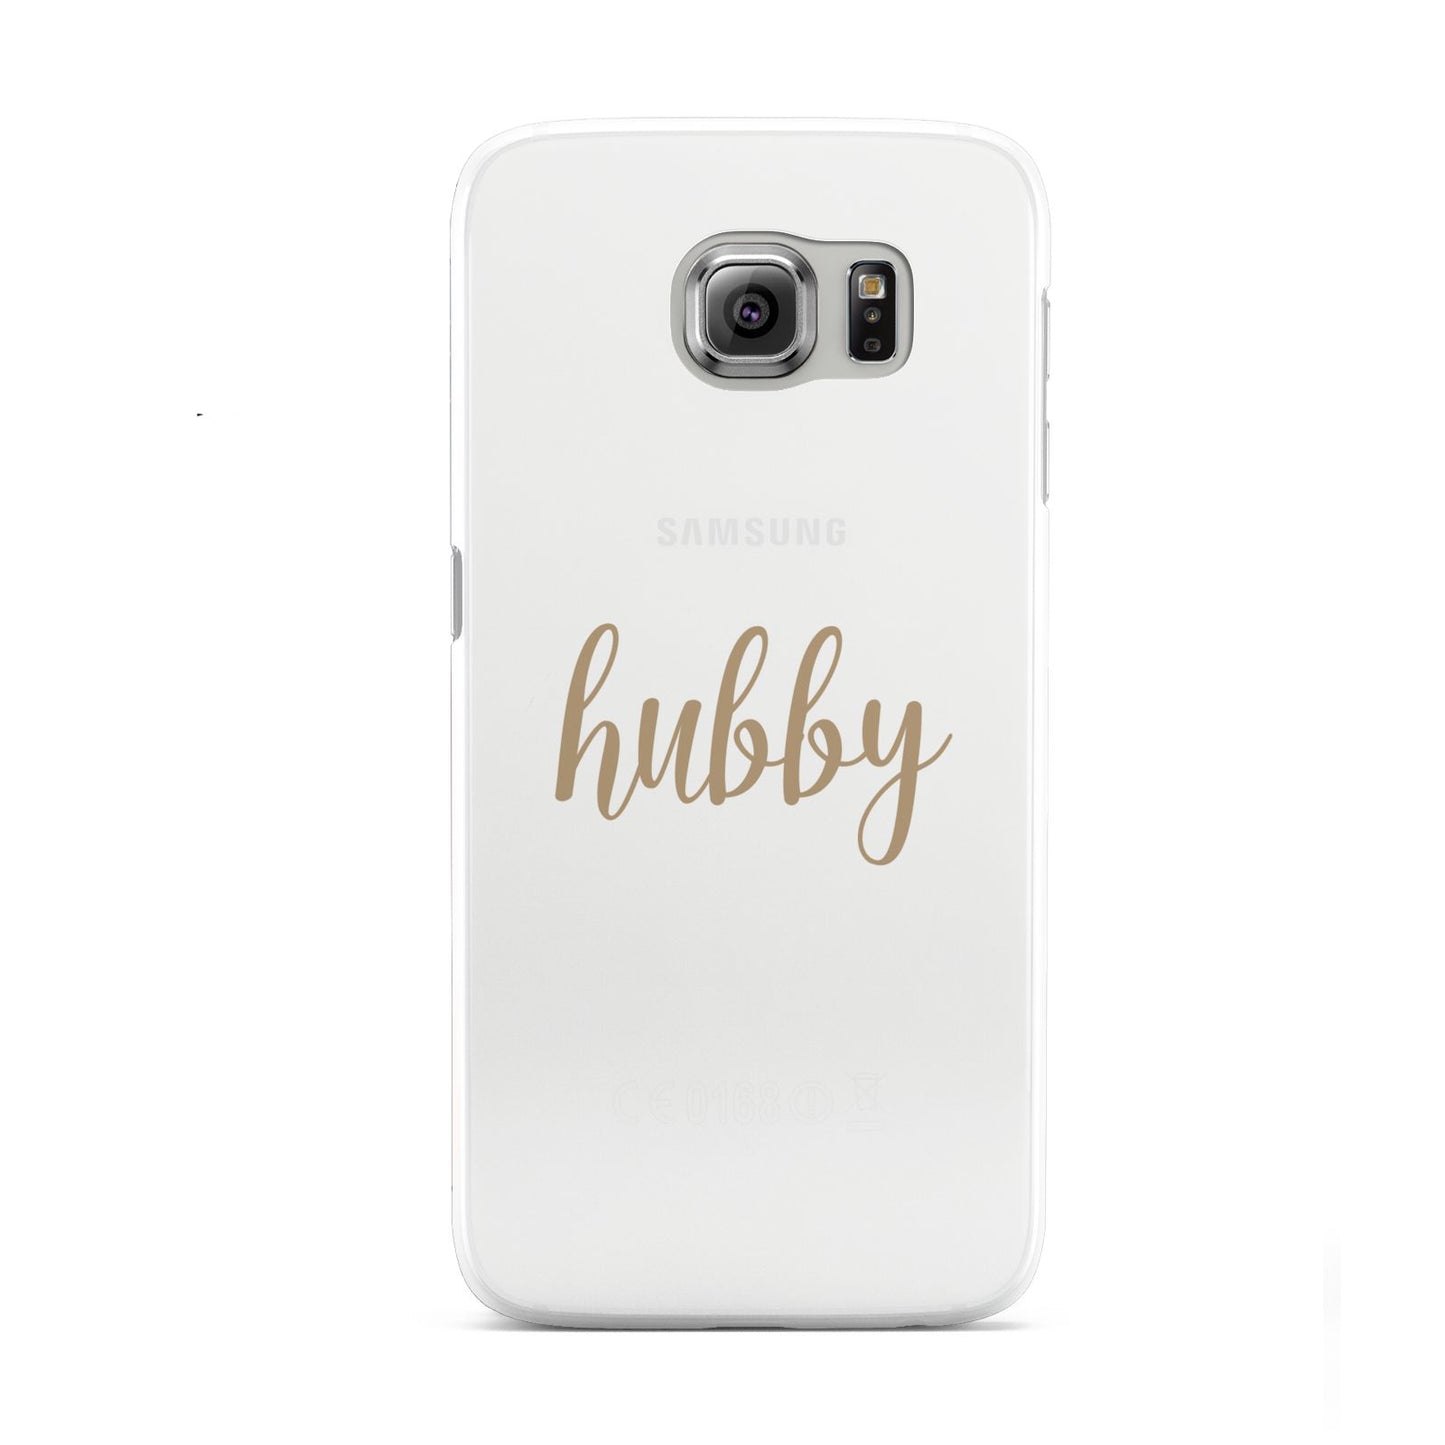 Hubby Samsung Galaxy S6 Case